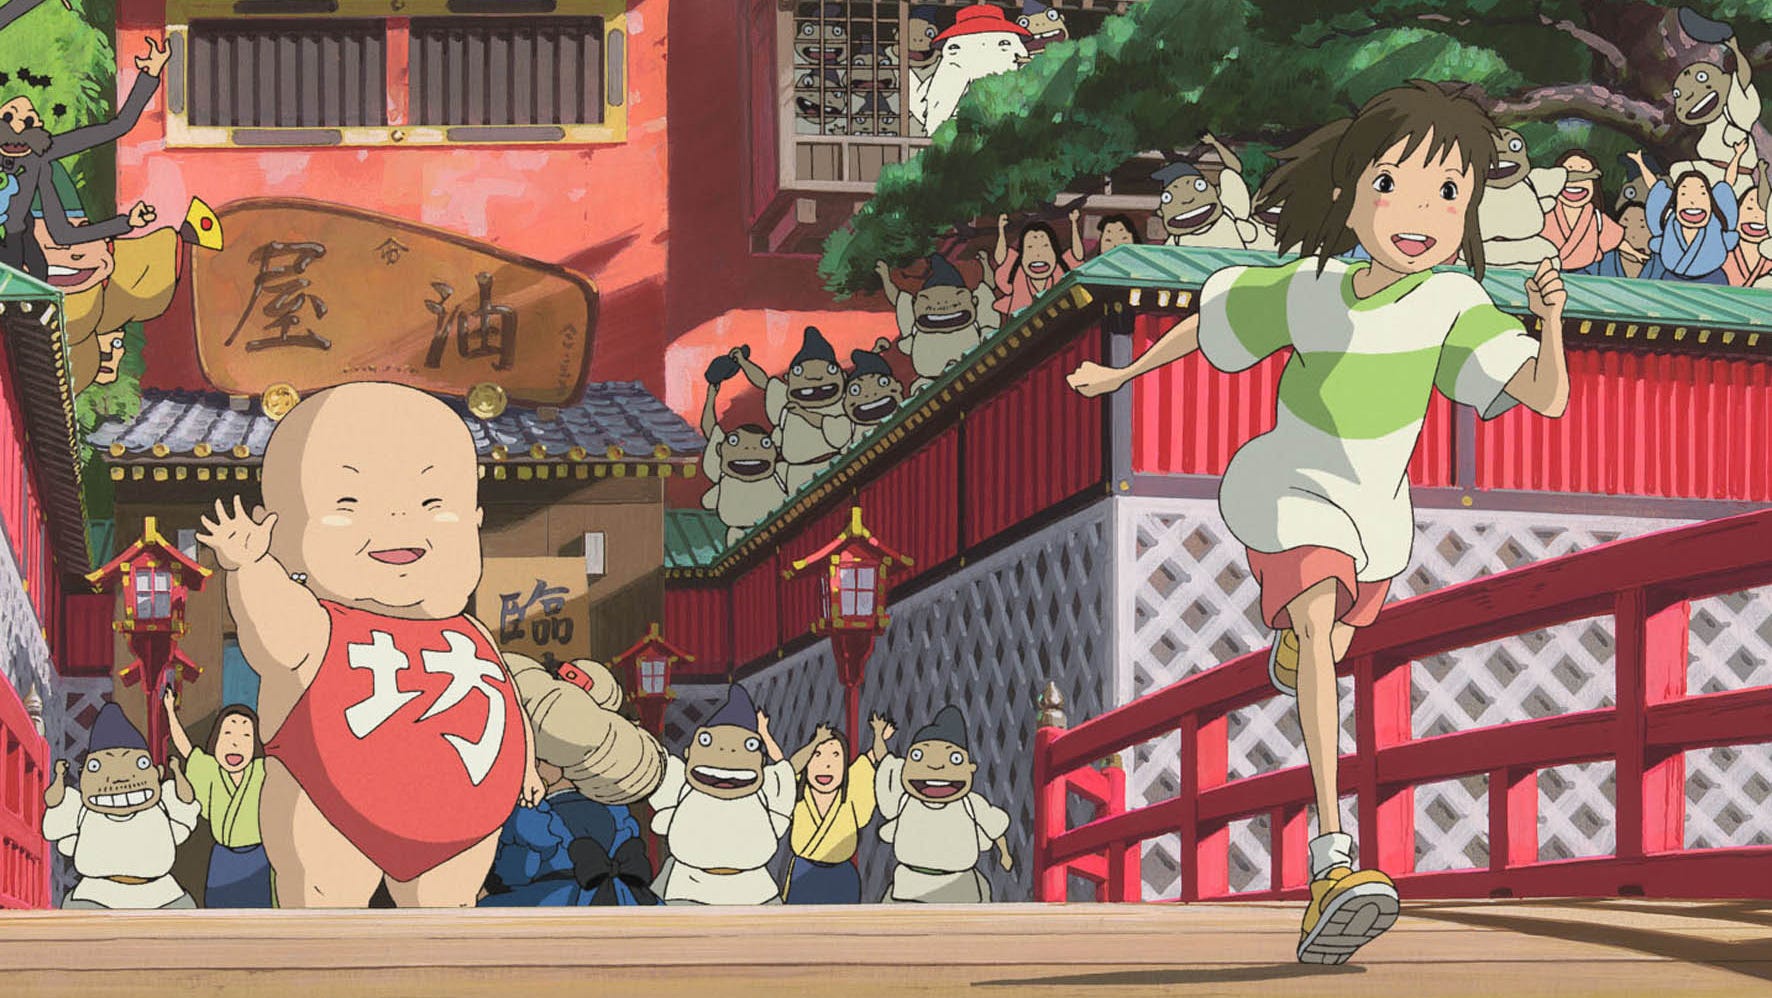 Spirited Away - A Hayao Miyazaki film